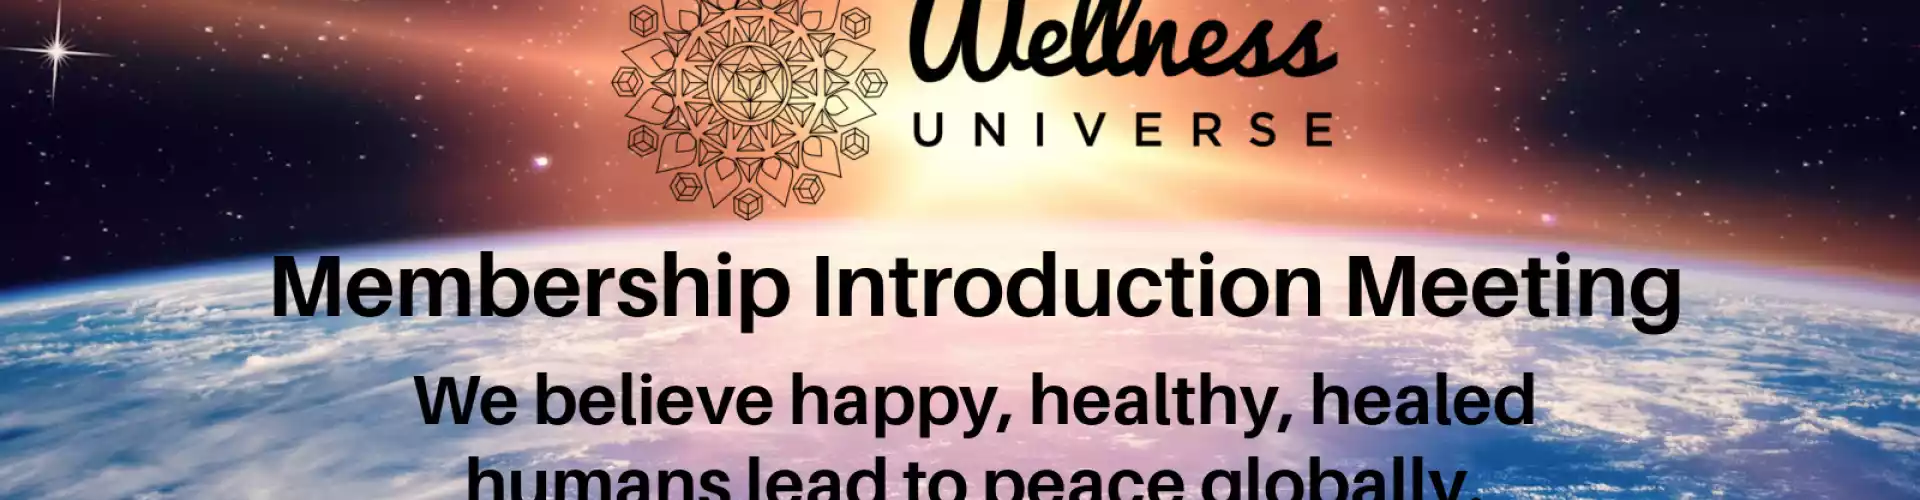 The Wellness Universe Membership Introduction